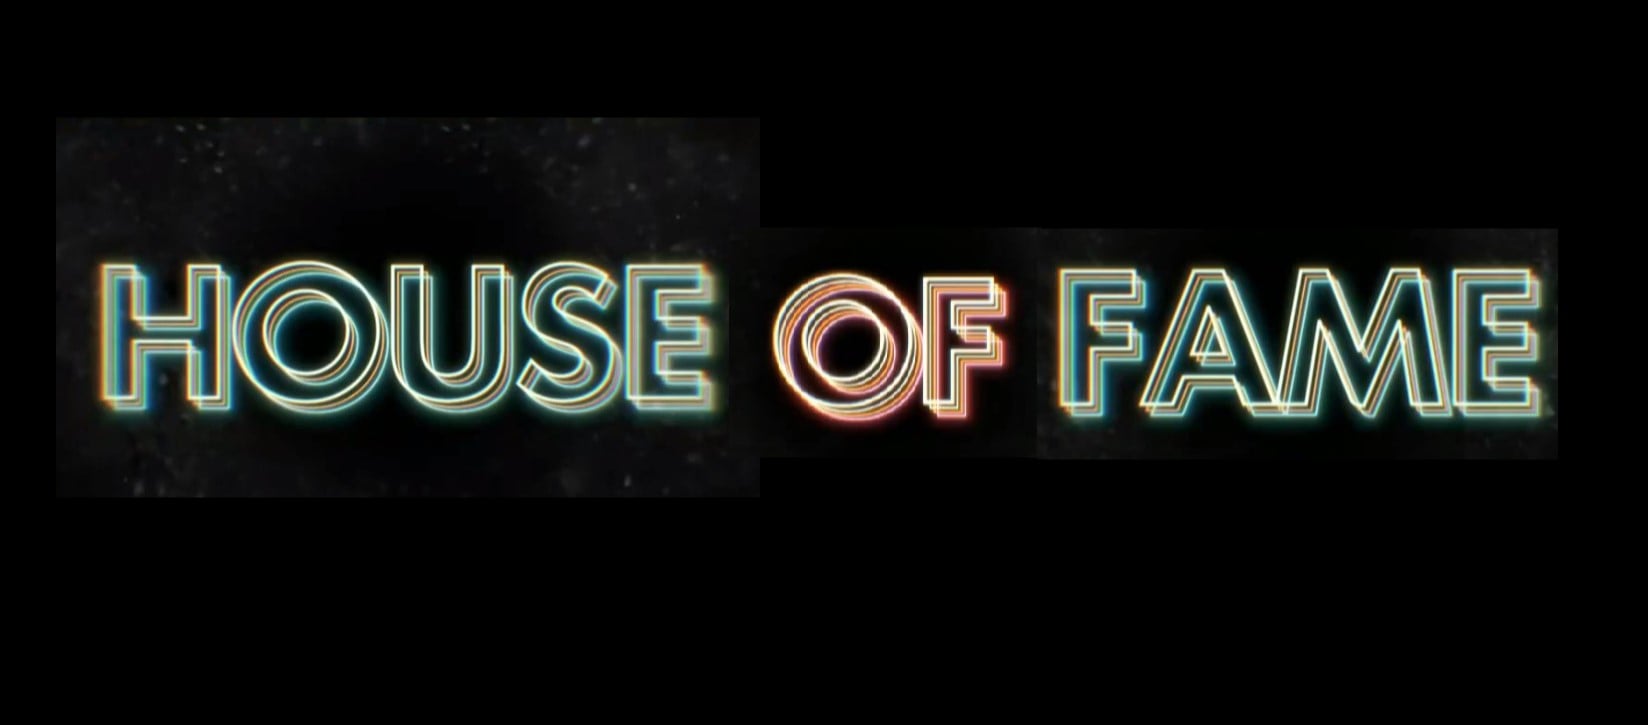 «House of fame»: Ανατροπή της τελευταίας στιγμής με την κριτική επιτροπή - Φωτογραφία 1